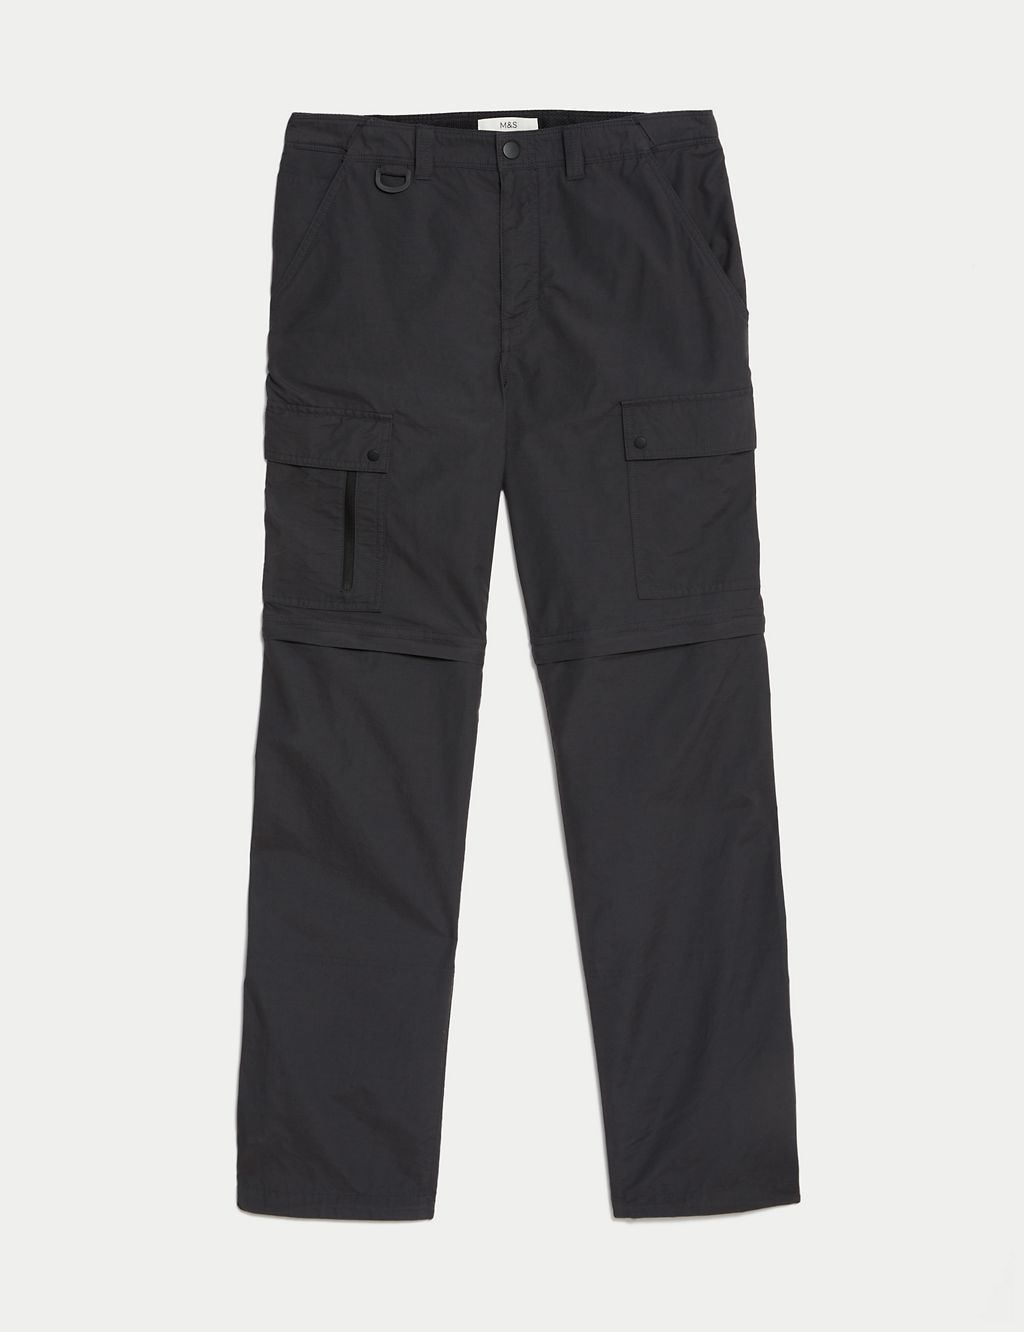 Zip Off Trekking Trousers with Stormwear™ 1 of 6